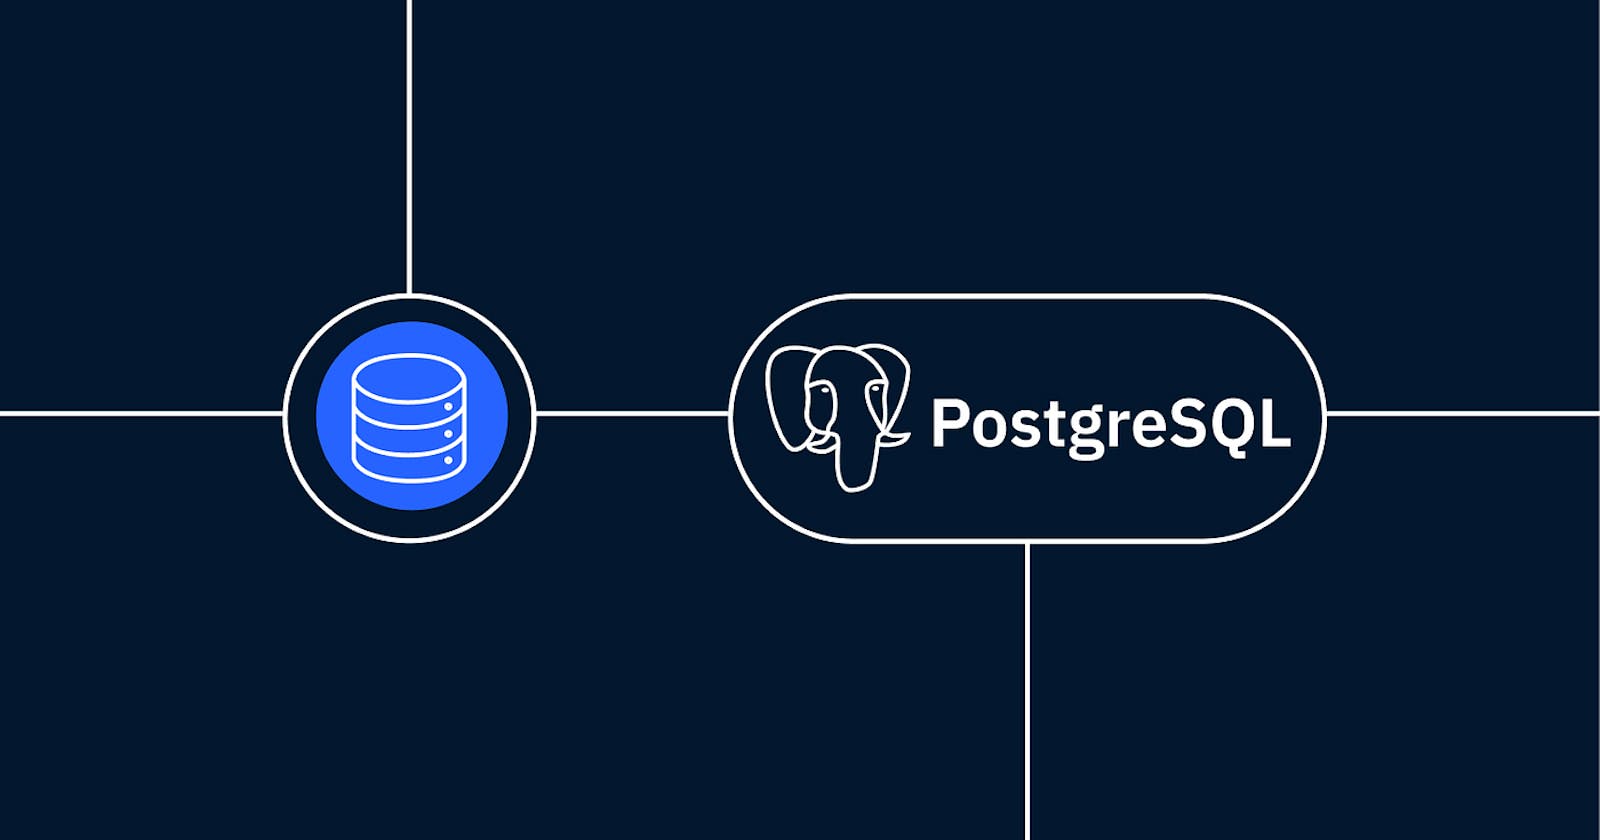 PostgreSQL: Insert Data into a Table